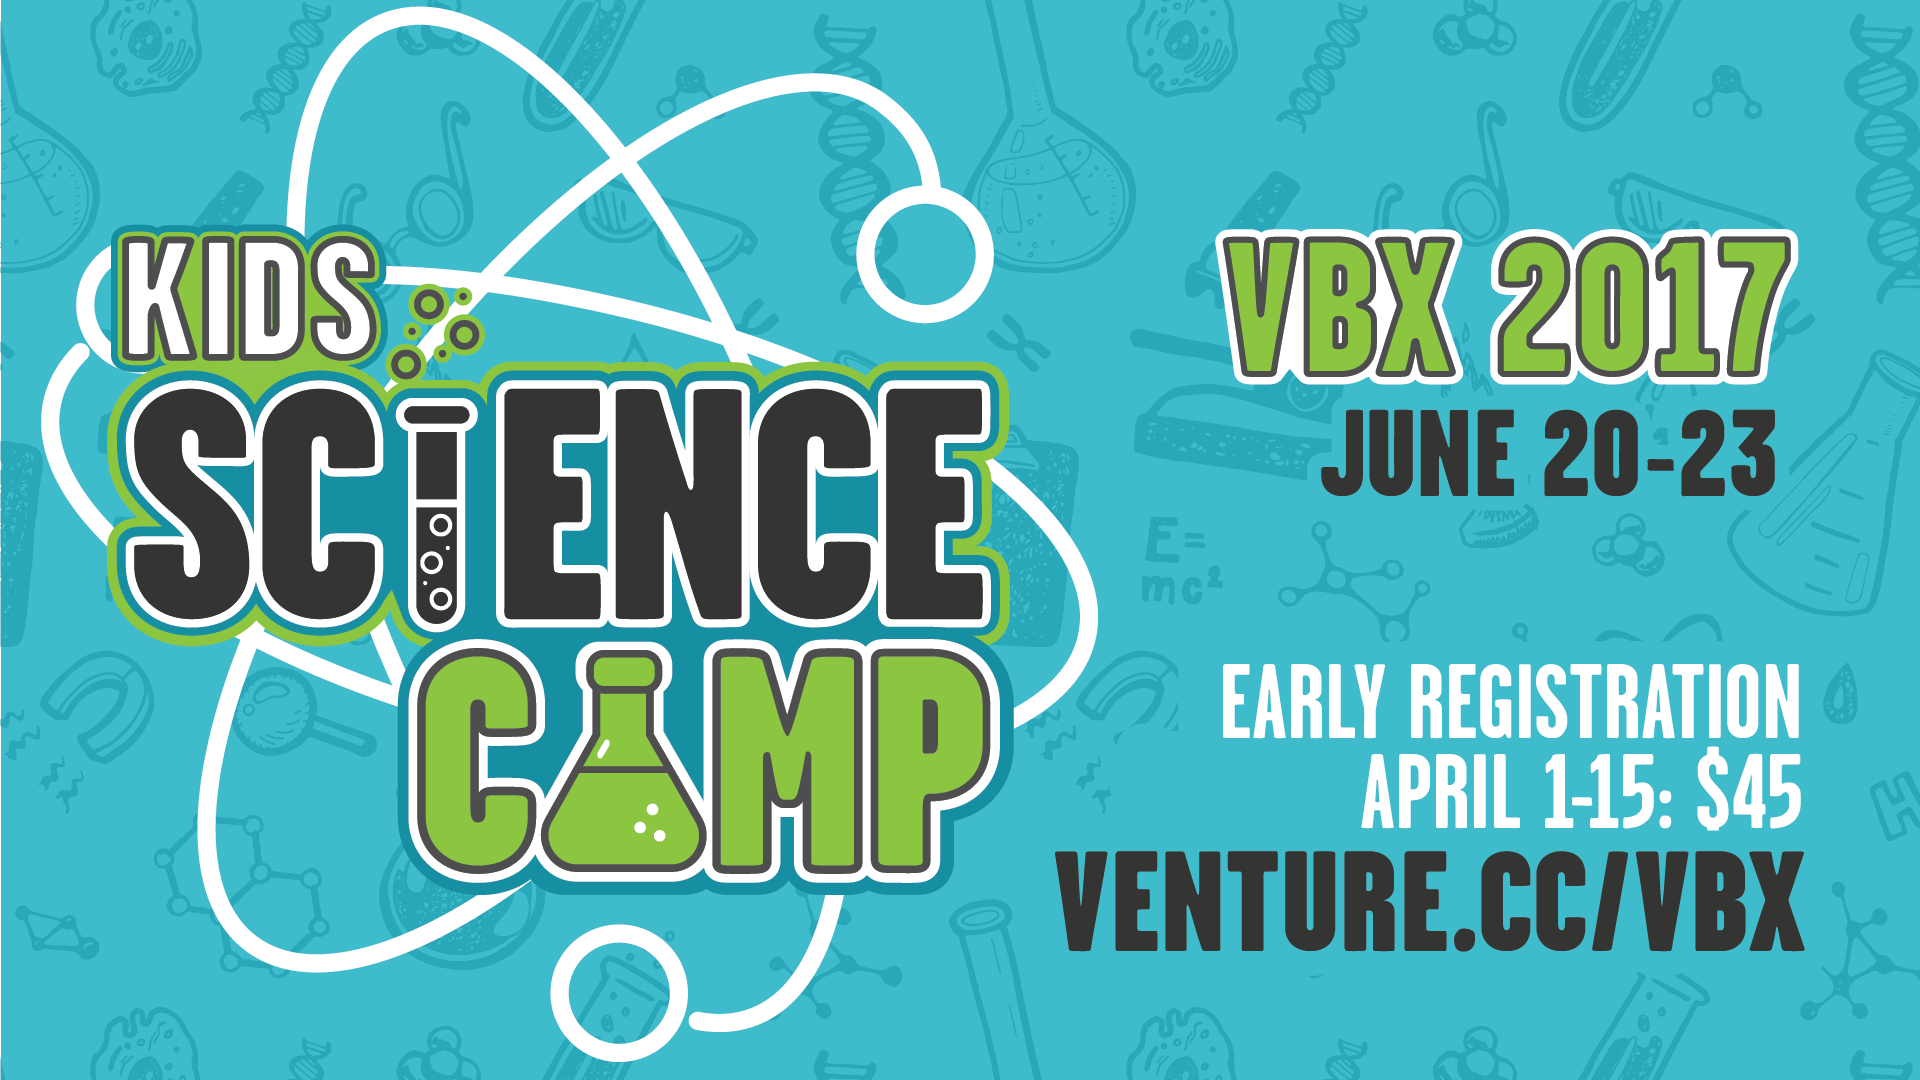 Kids Science Camp Vacation BIble School (VBS VBX) Main Branding